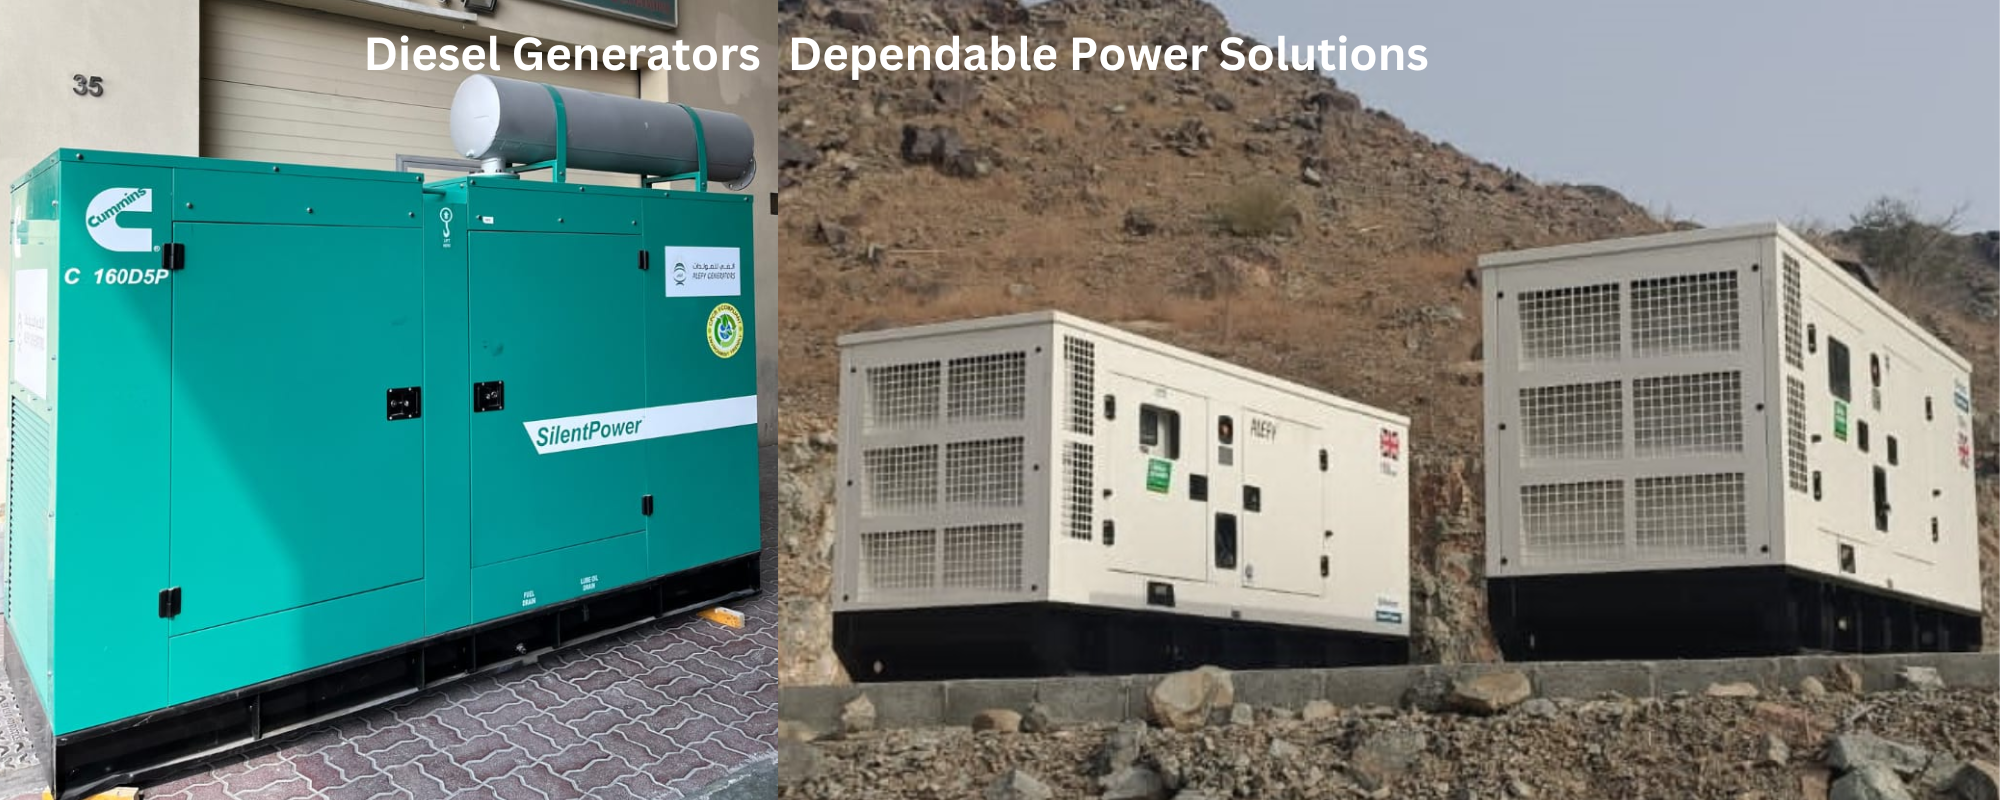 Diesel Generators – Dependable Power Solutions